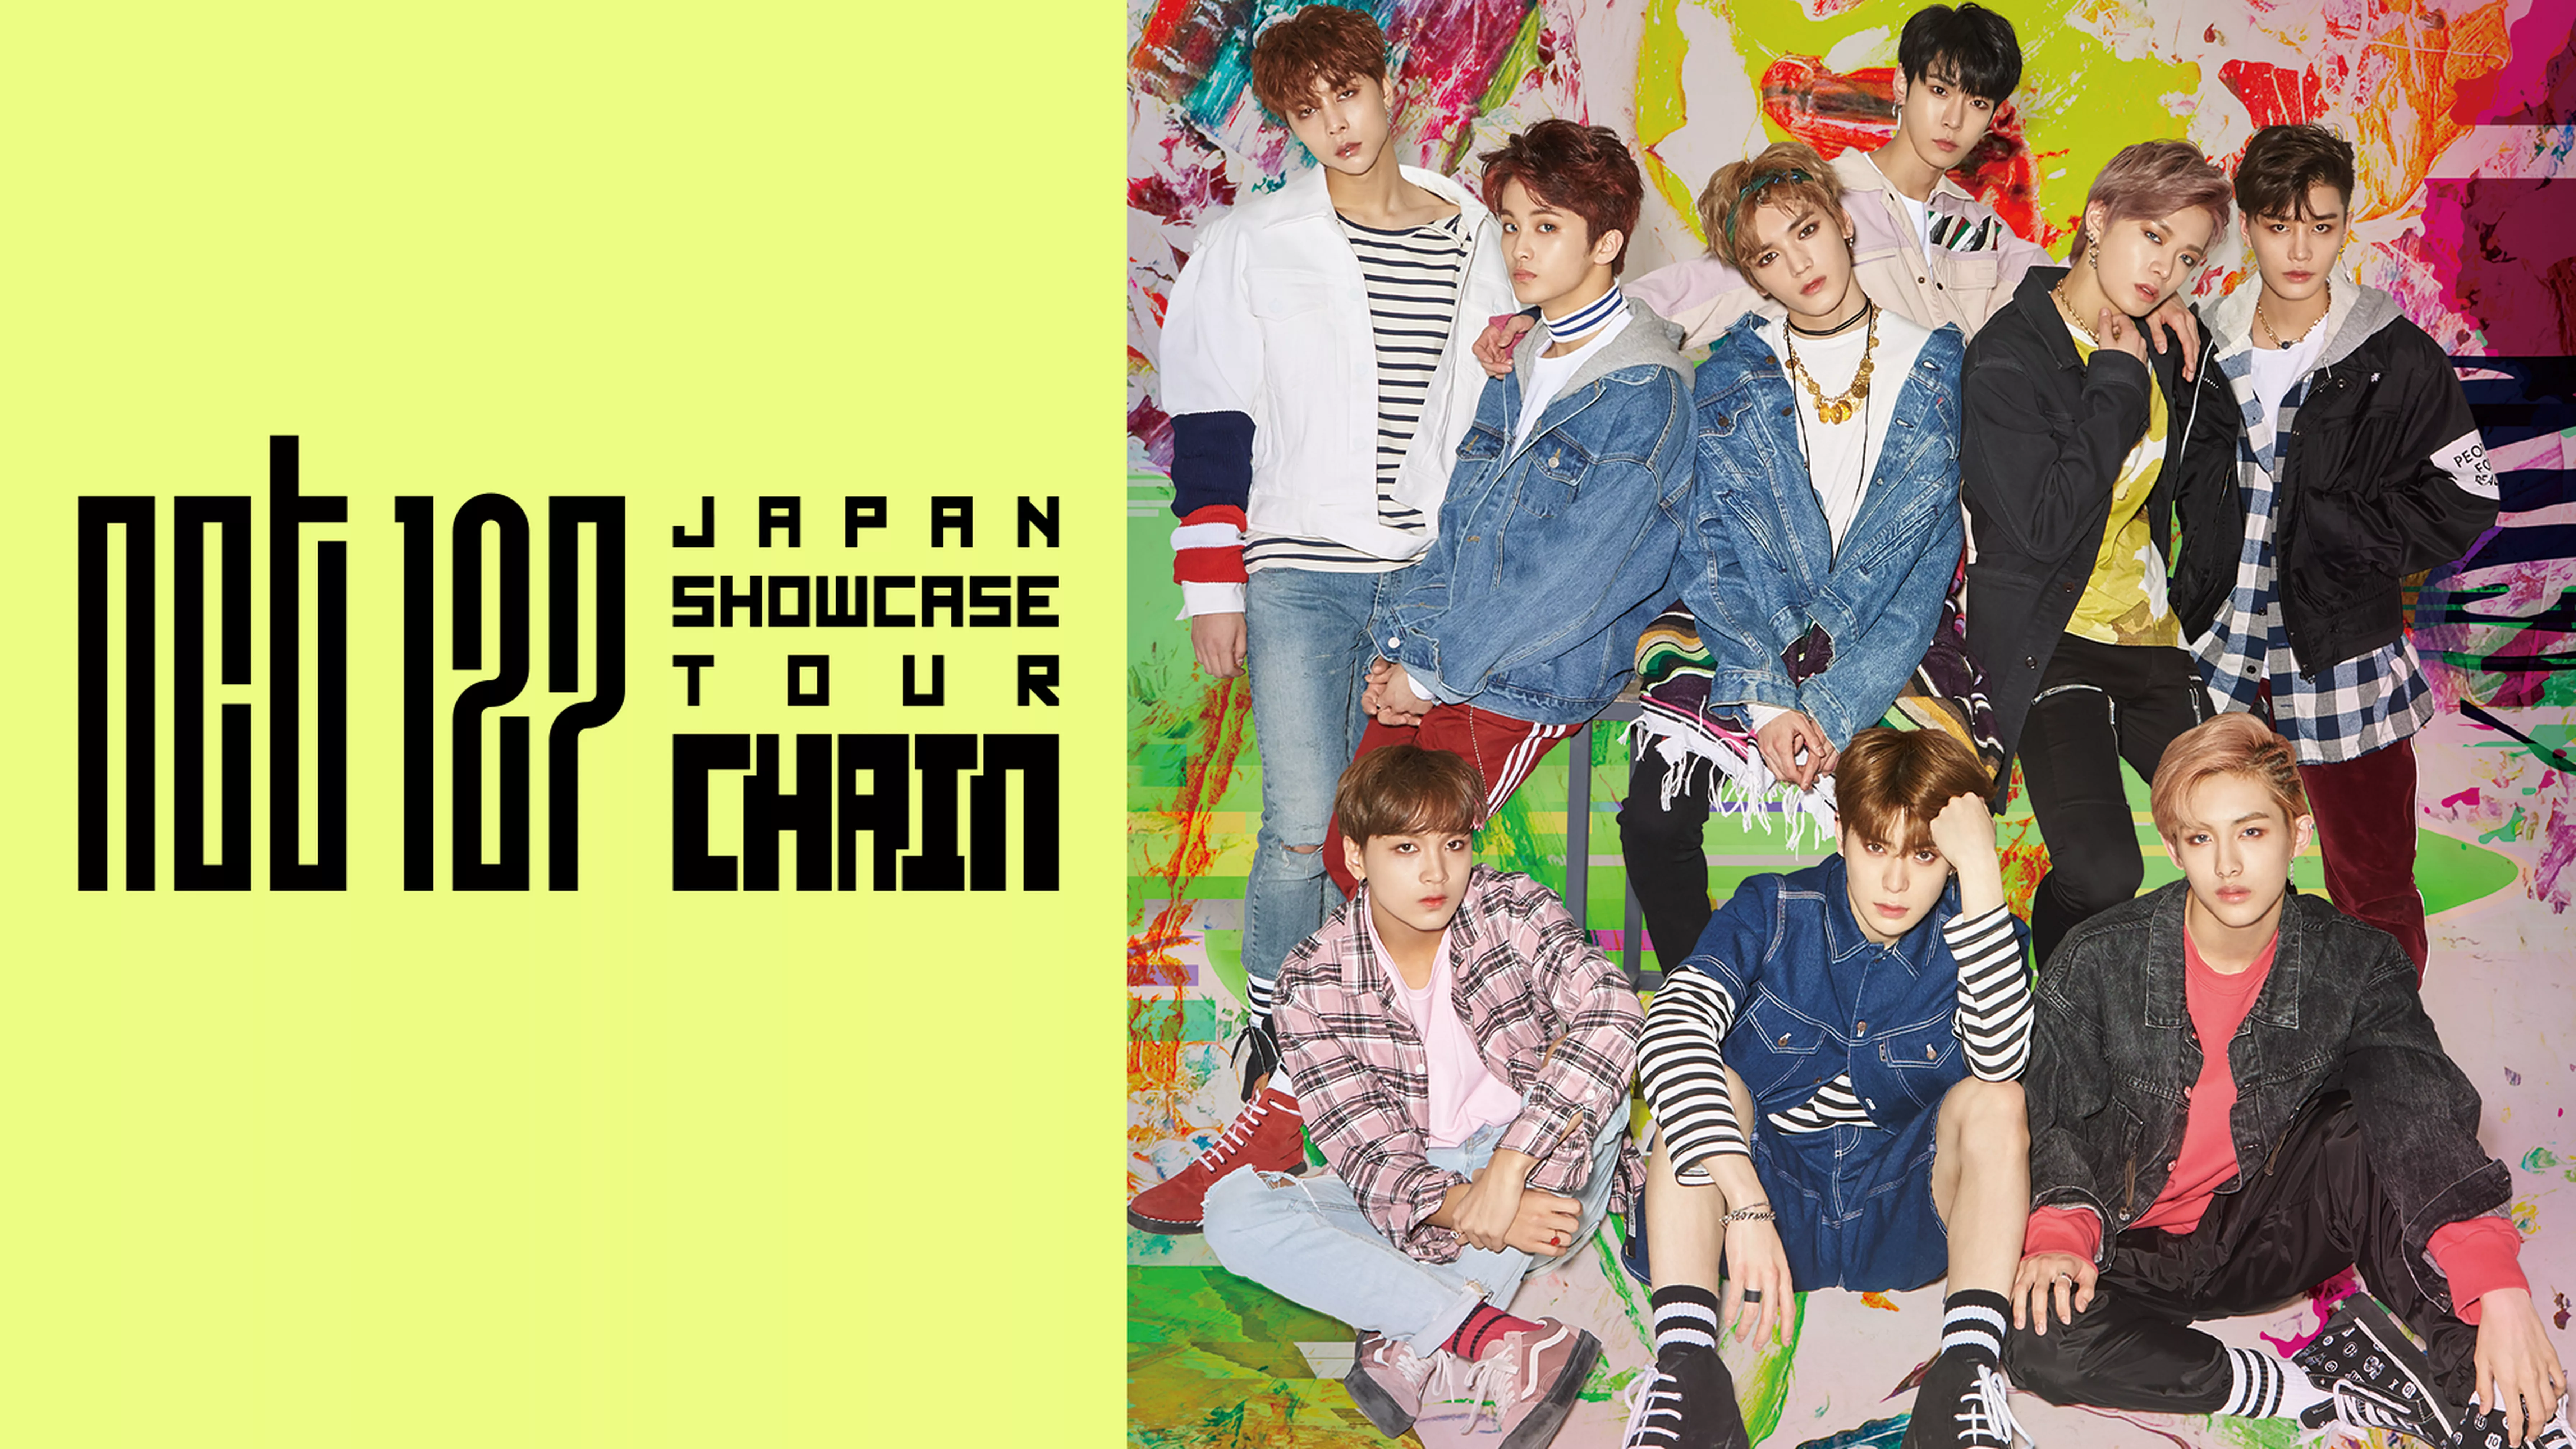 NCT 127 Japan Showcase Tour “Chain” in Tokyo